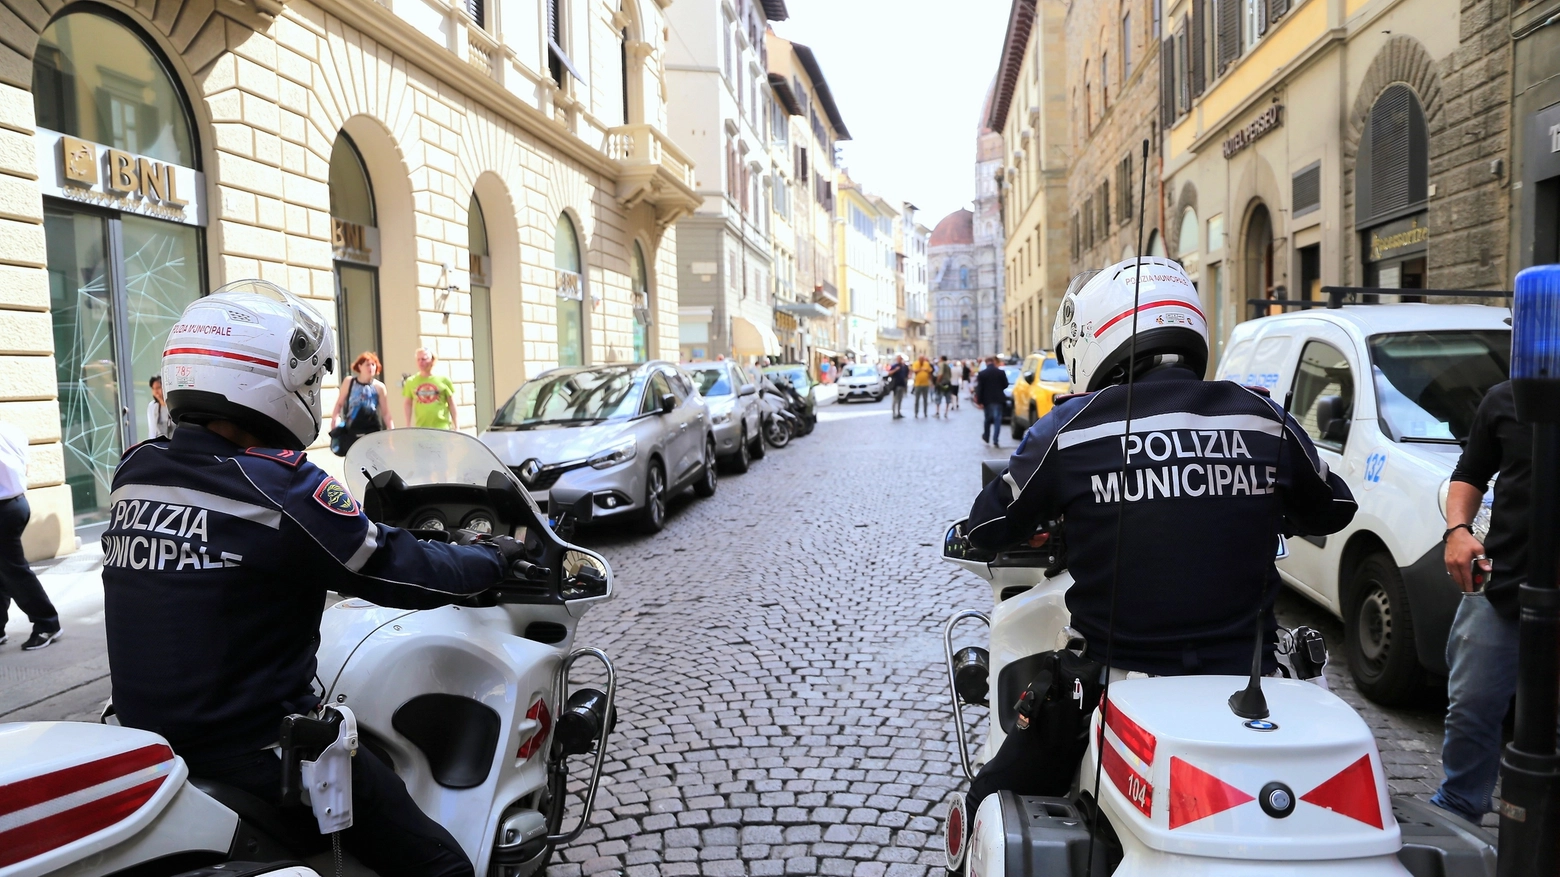 La polizia municipale di Firenze